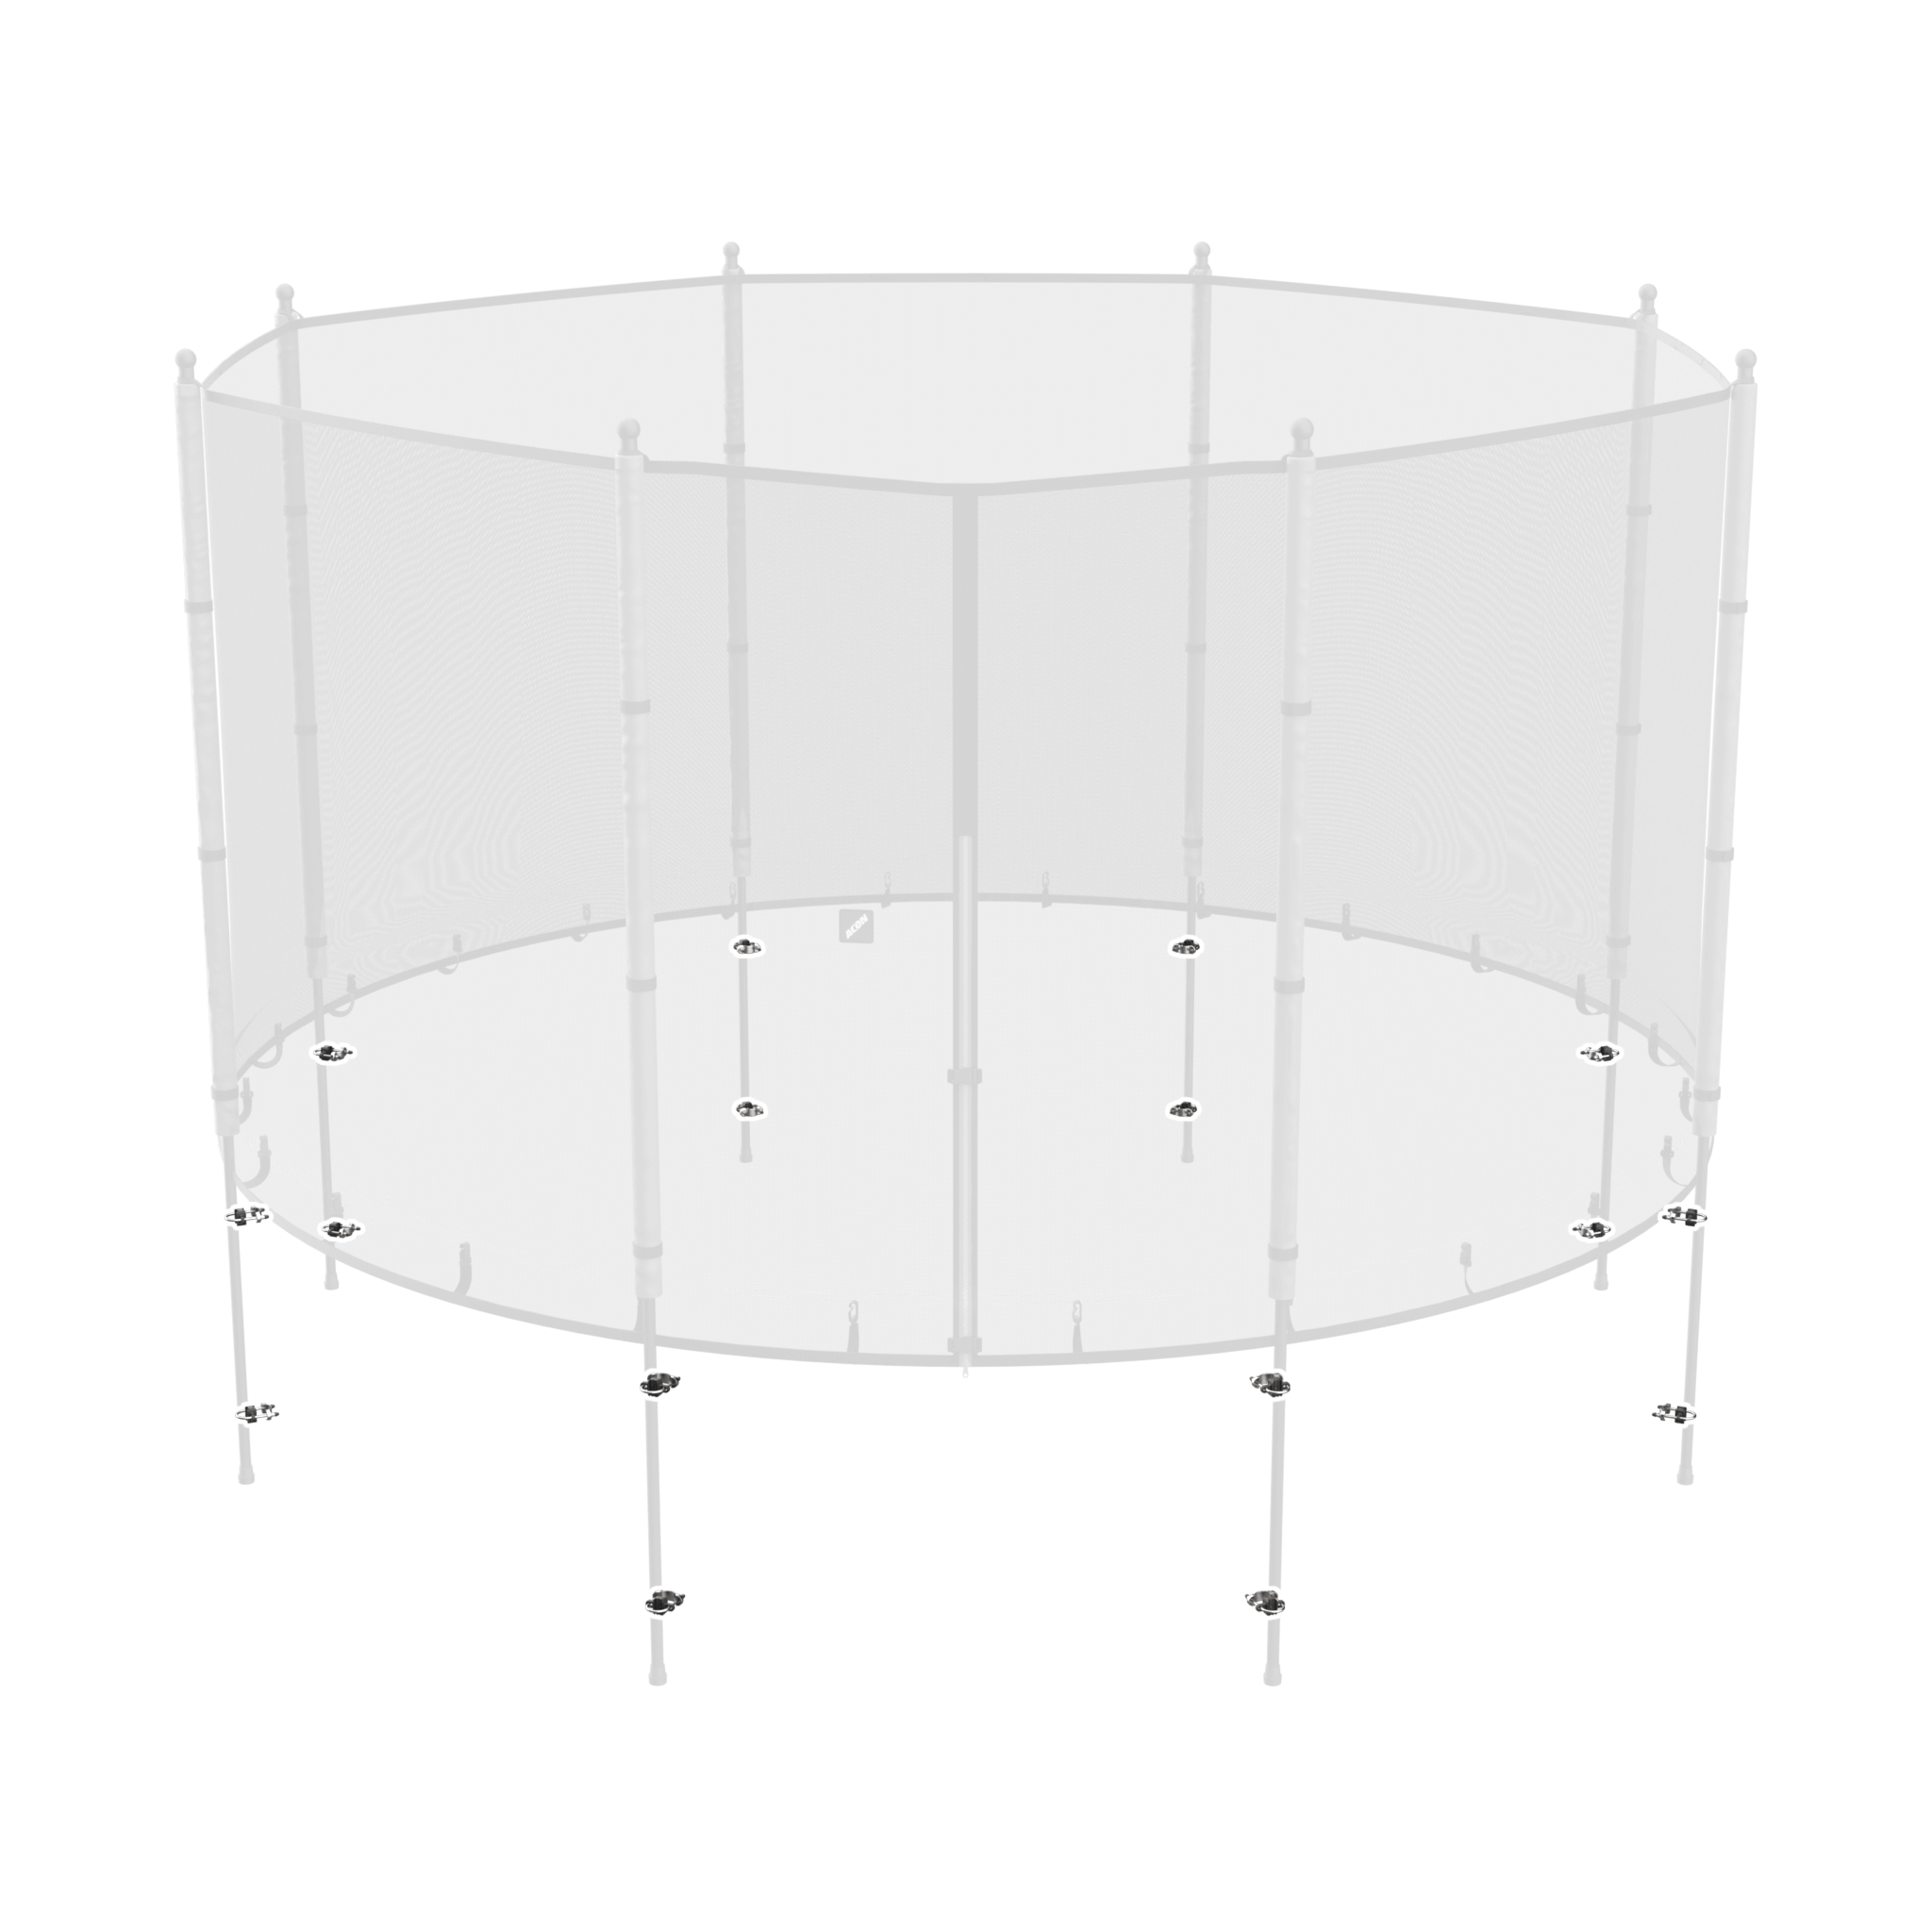 Standard enclosure on white background